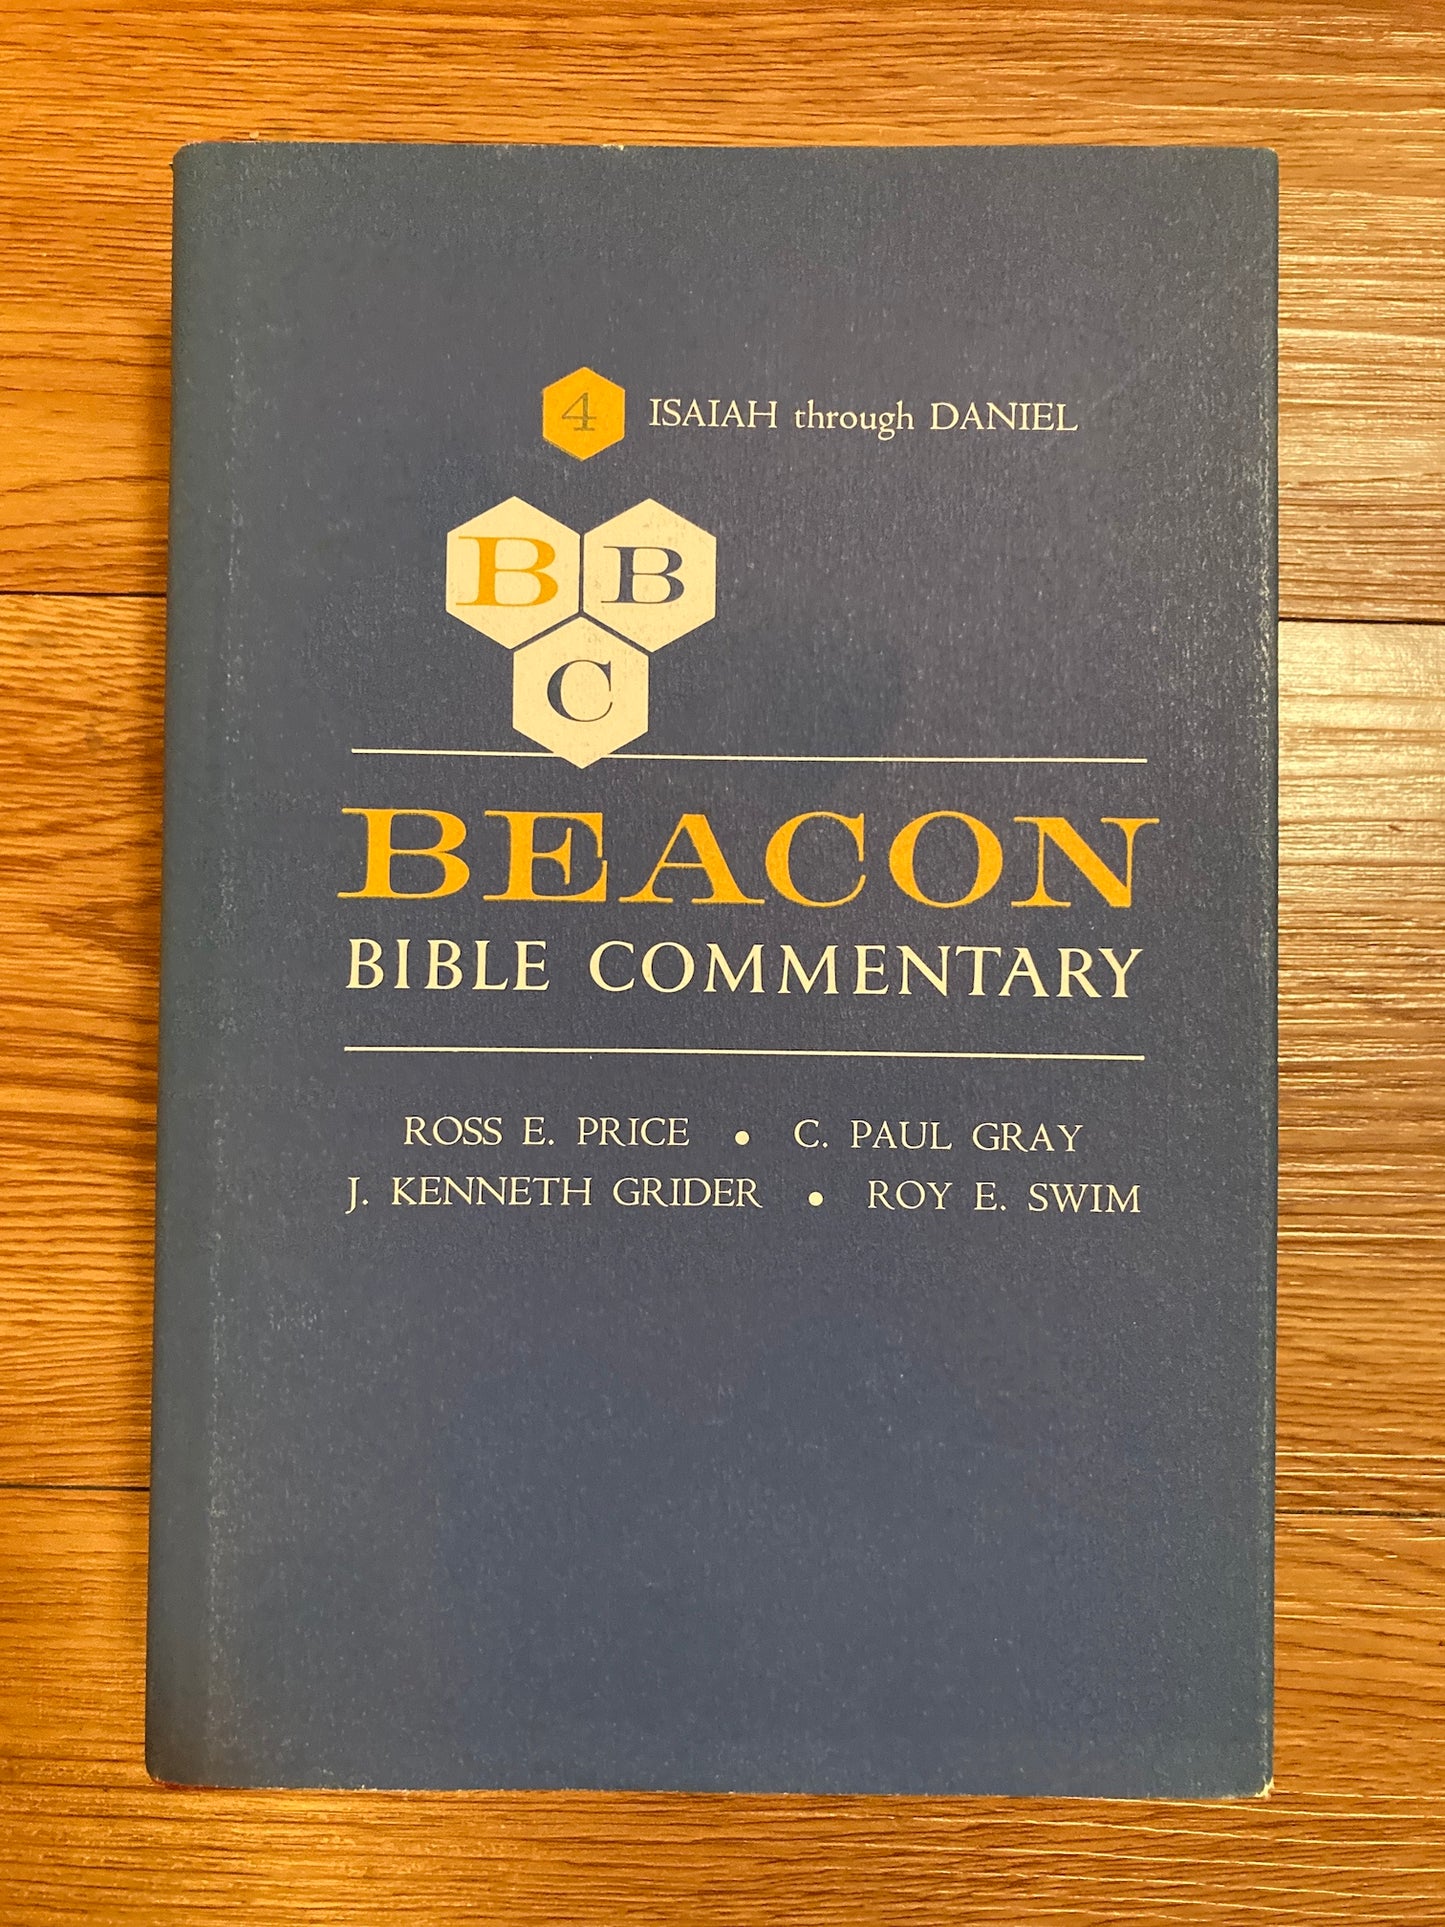 Beacon Bible Commentary, Volume 4: Isaiah through Daniel